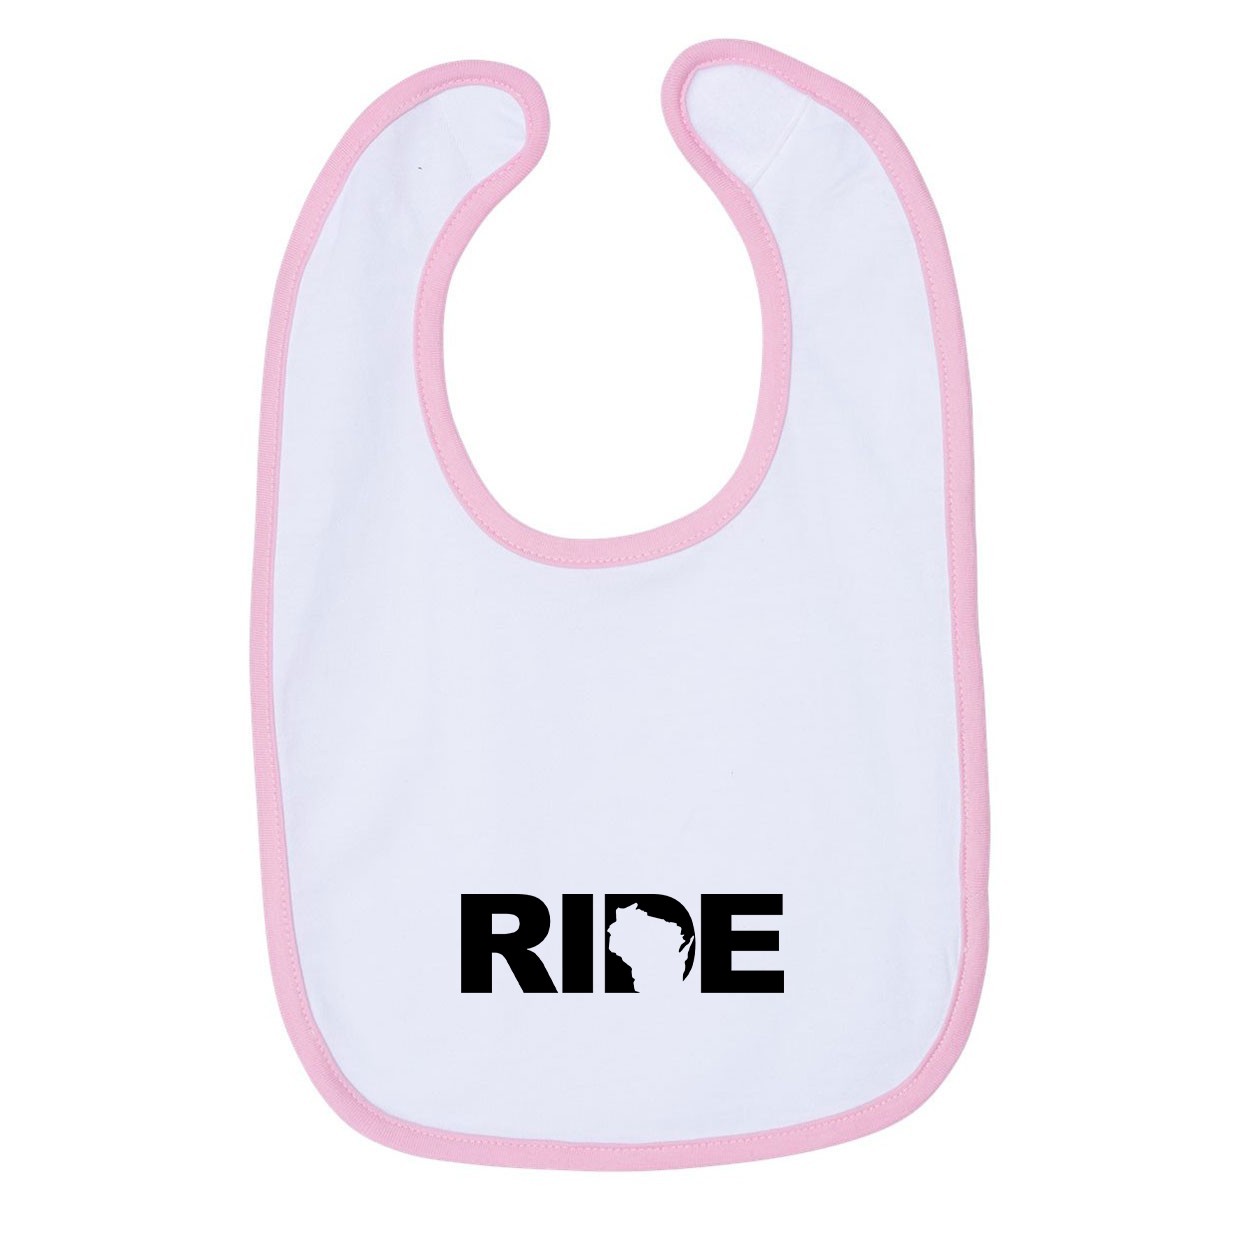 Ride Wisconsin Classic Infant Baby Bib White/Pink (Black Logo)